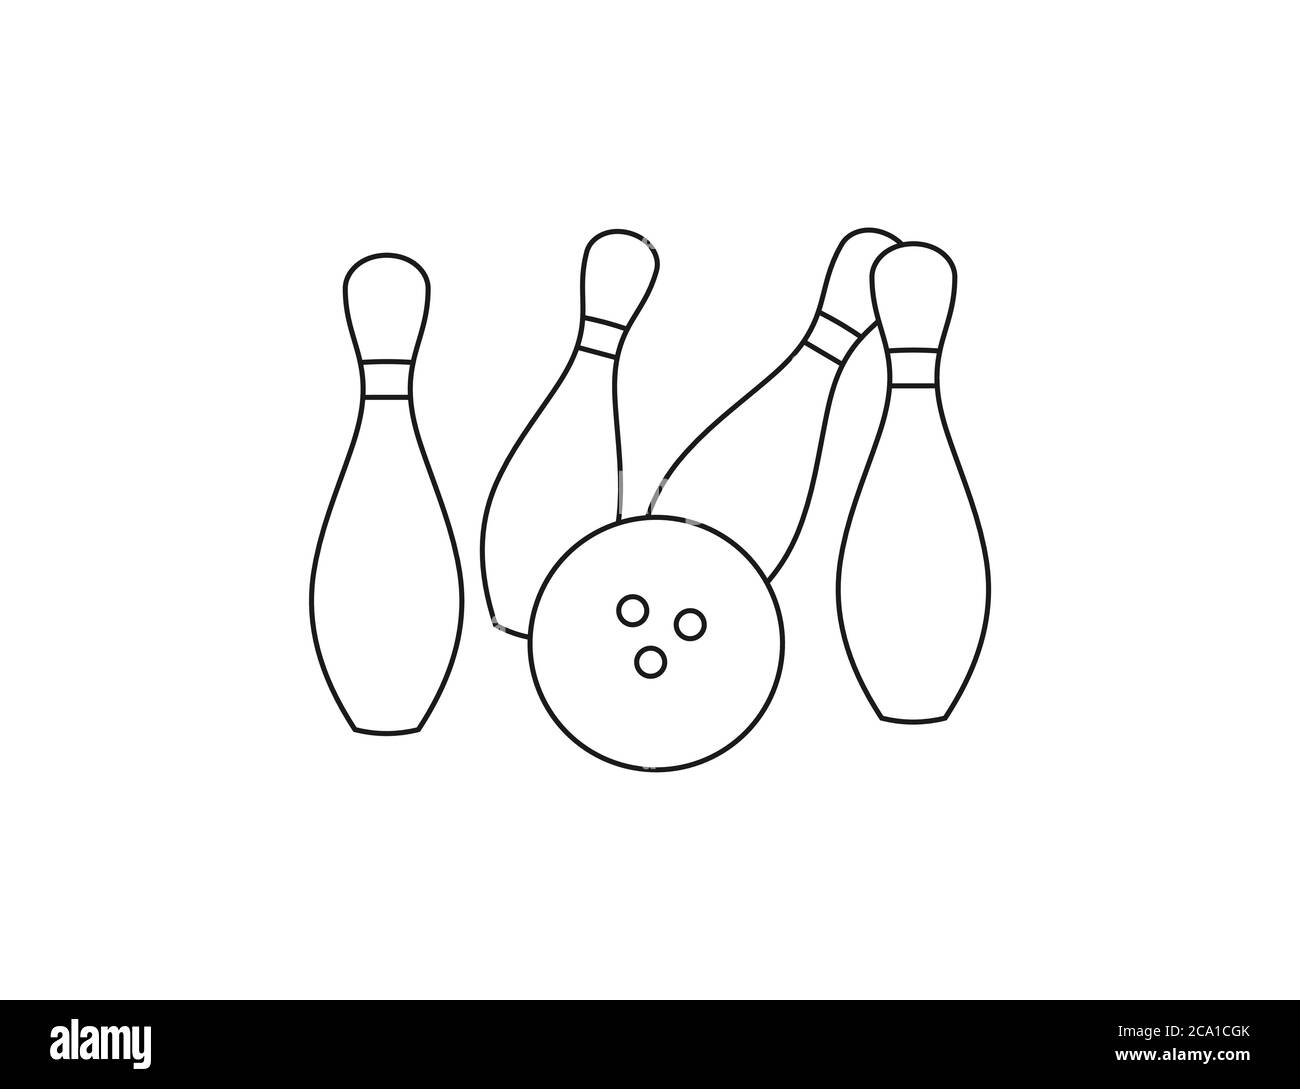 Bowling, Spiel, Streik Symbol. Vektor-Illustration, flaches Design. Stock Vektor